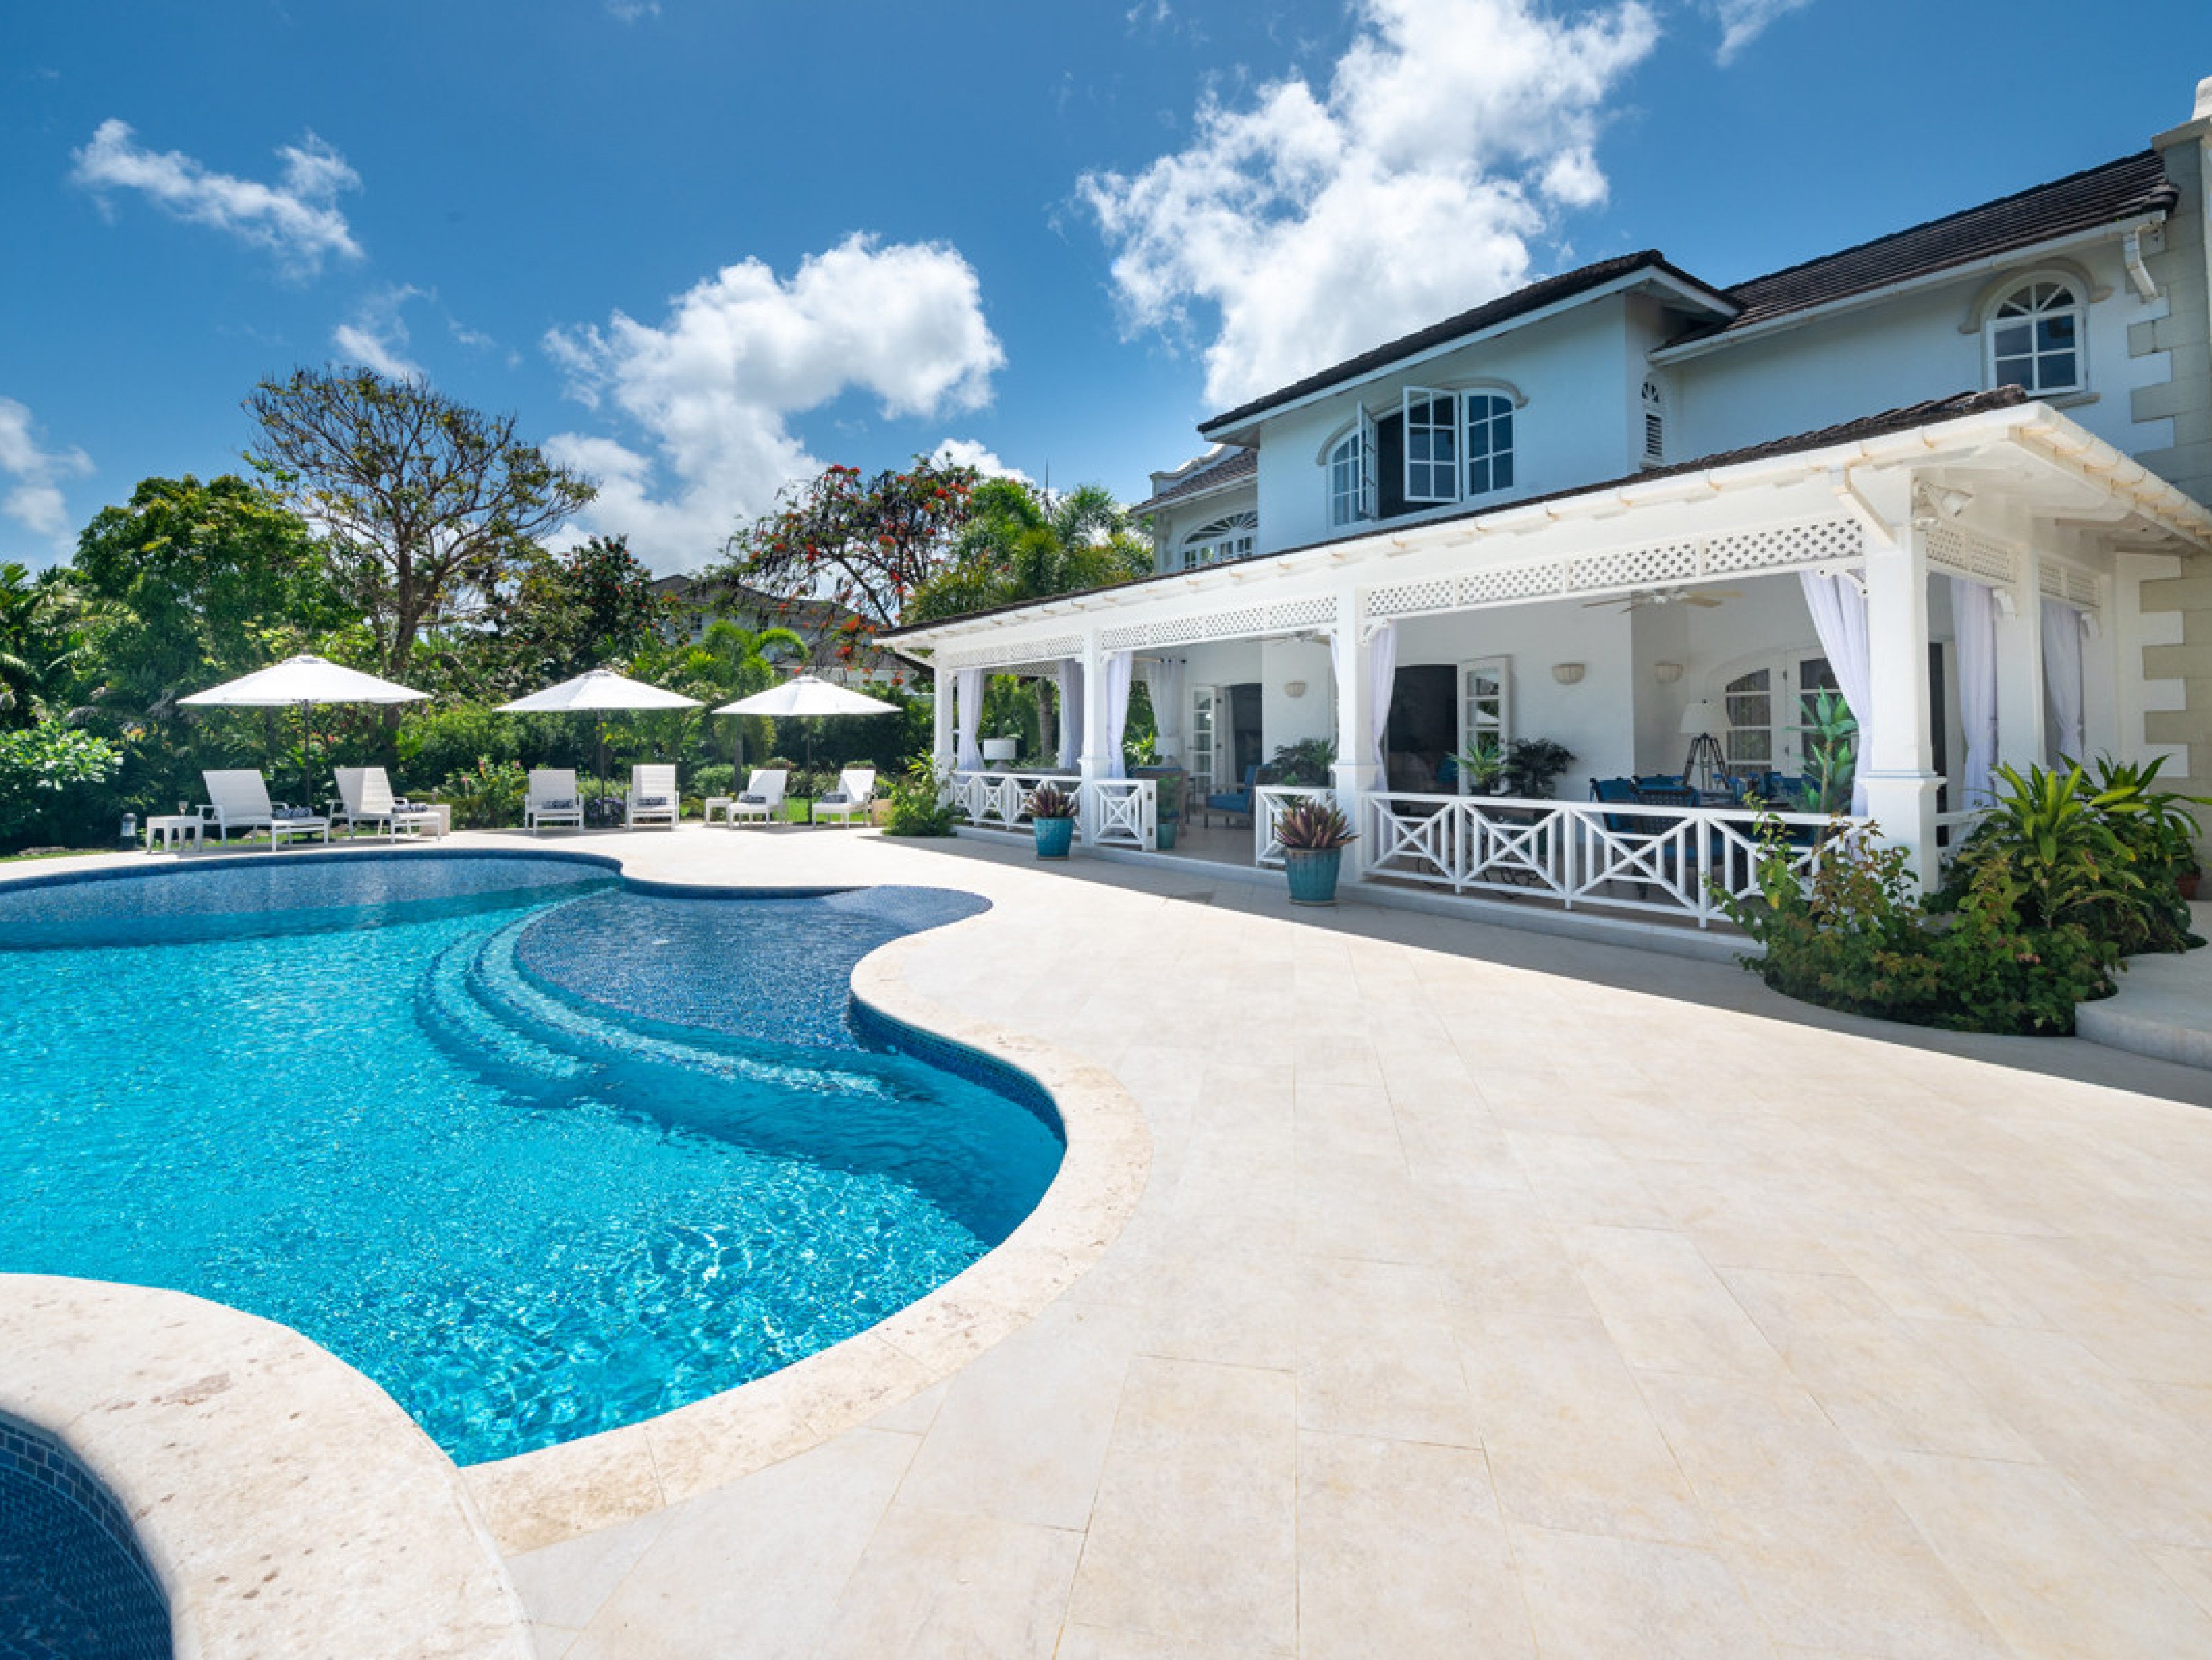 Sugar Hill - Fiddlesticks Sugar Hill Resort Barbados rentals with pools